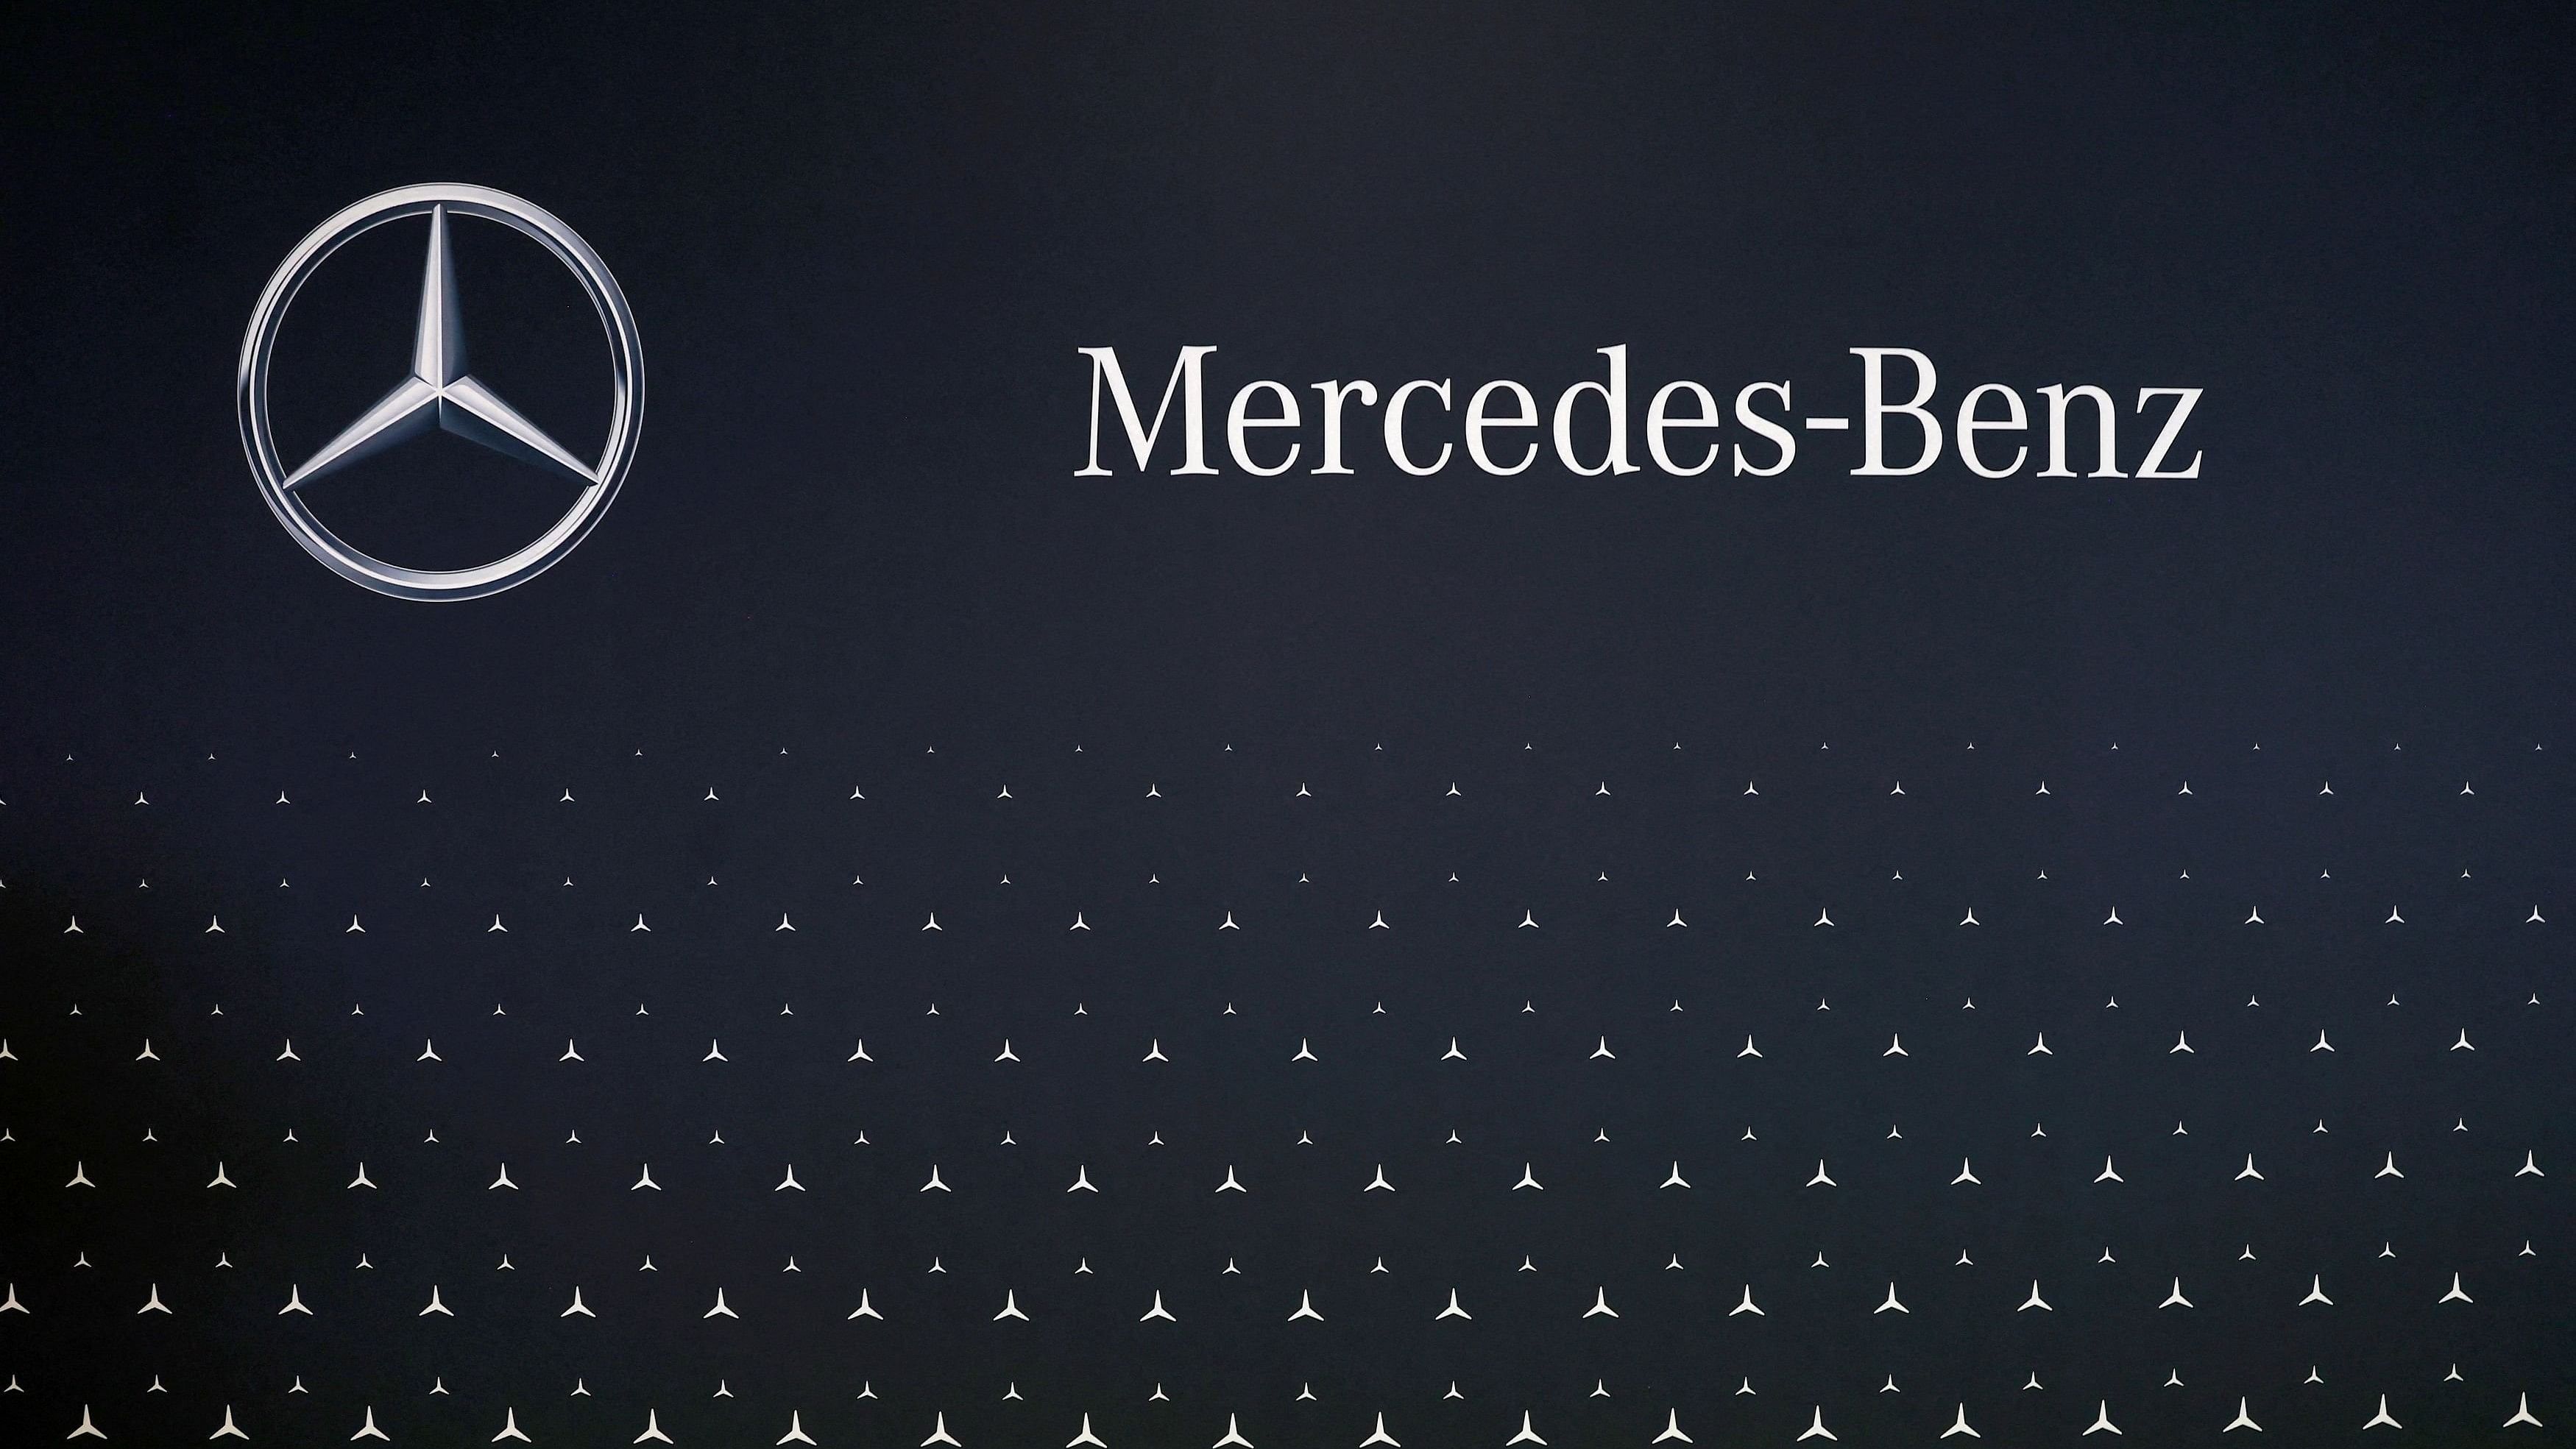 <div class="paragraphs"><p>The Mercedes-Benz logo on display.</p></div>